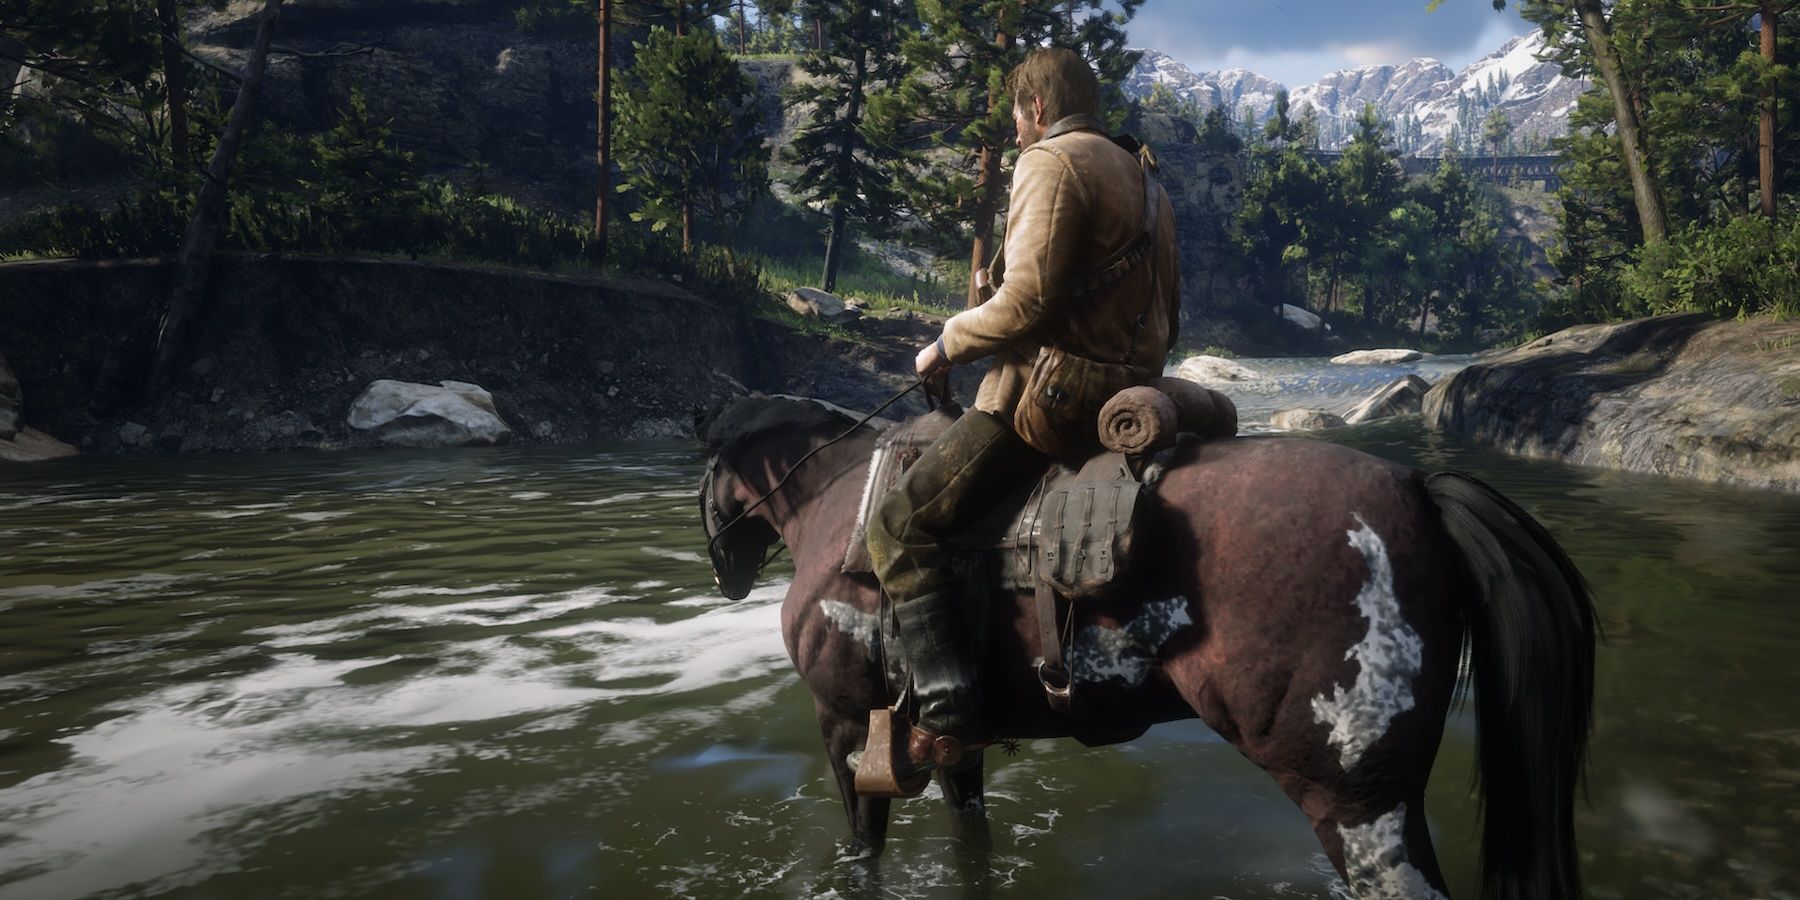 Arthur riding a horse near a river stream